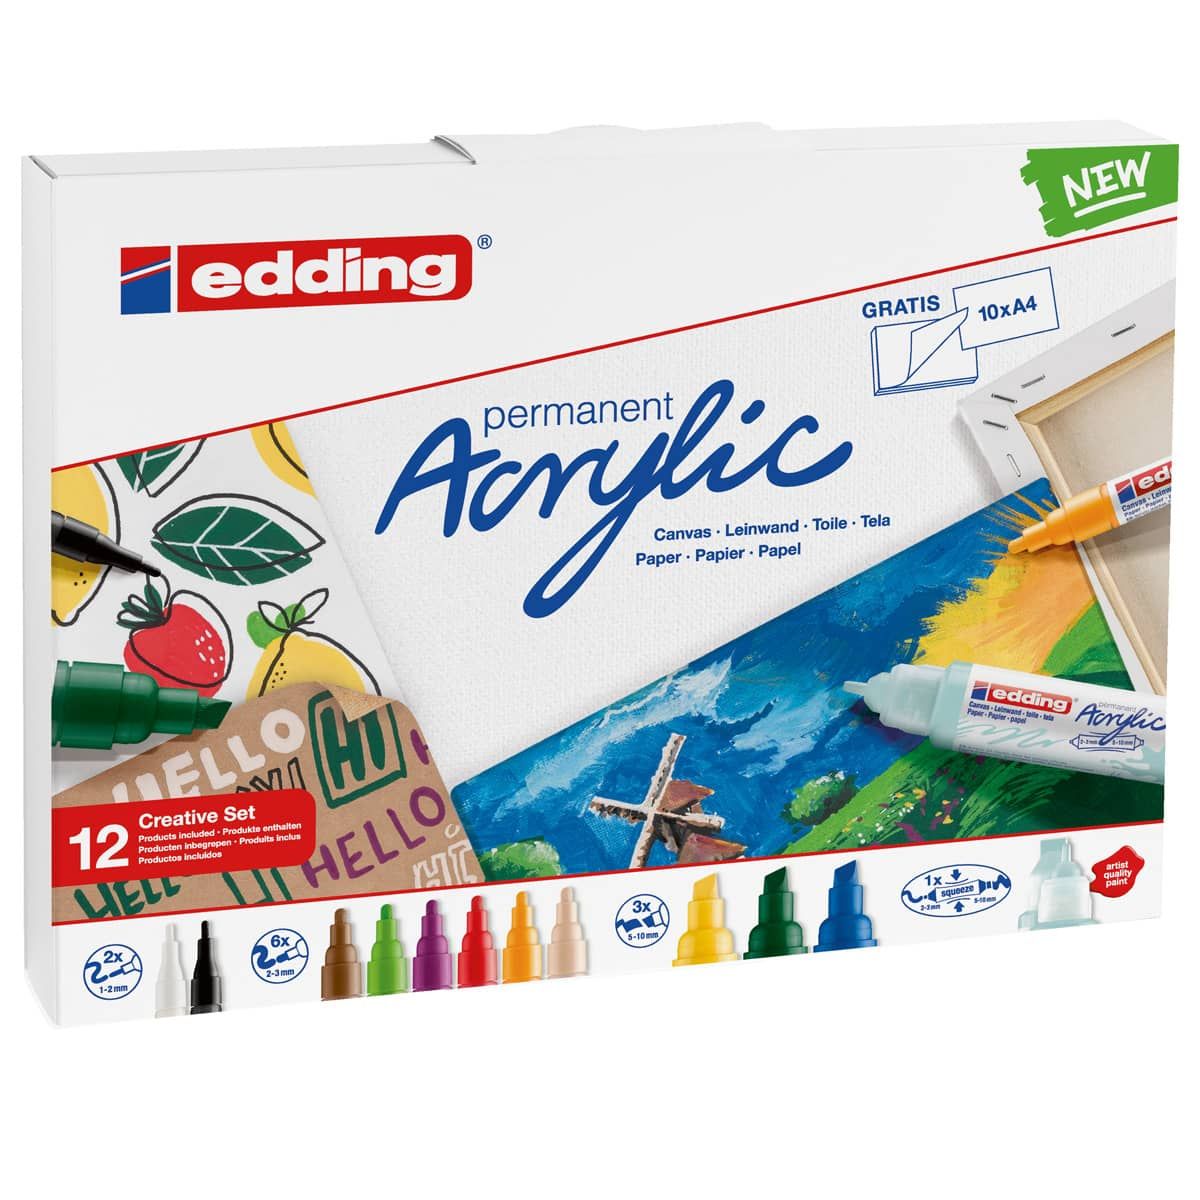 Edding Acrylic Marker Starter Creative Set of 12 Colors